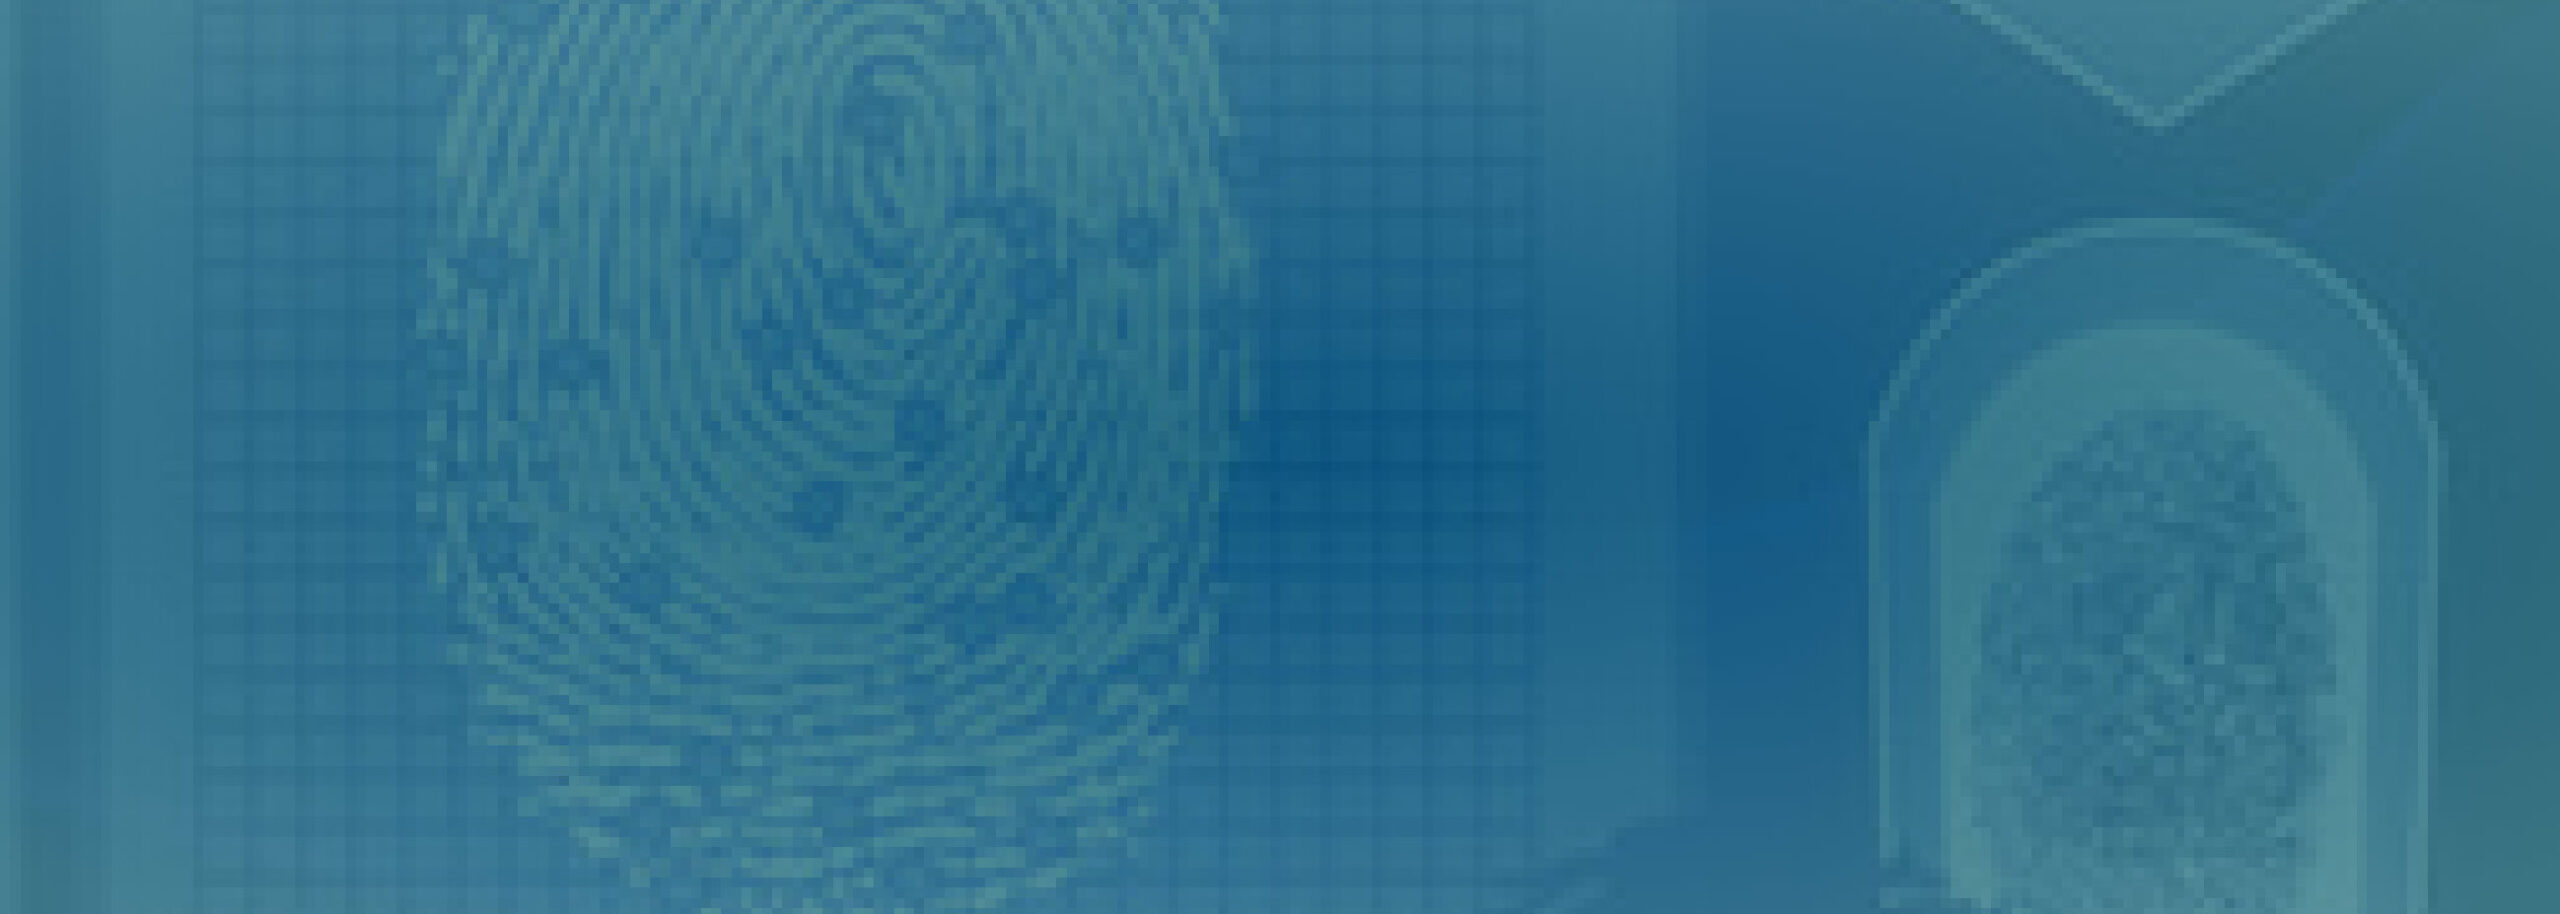 fingerprint image with dark teal overlay